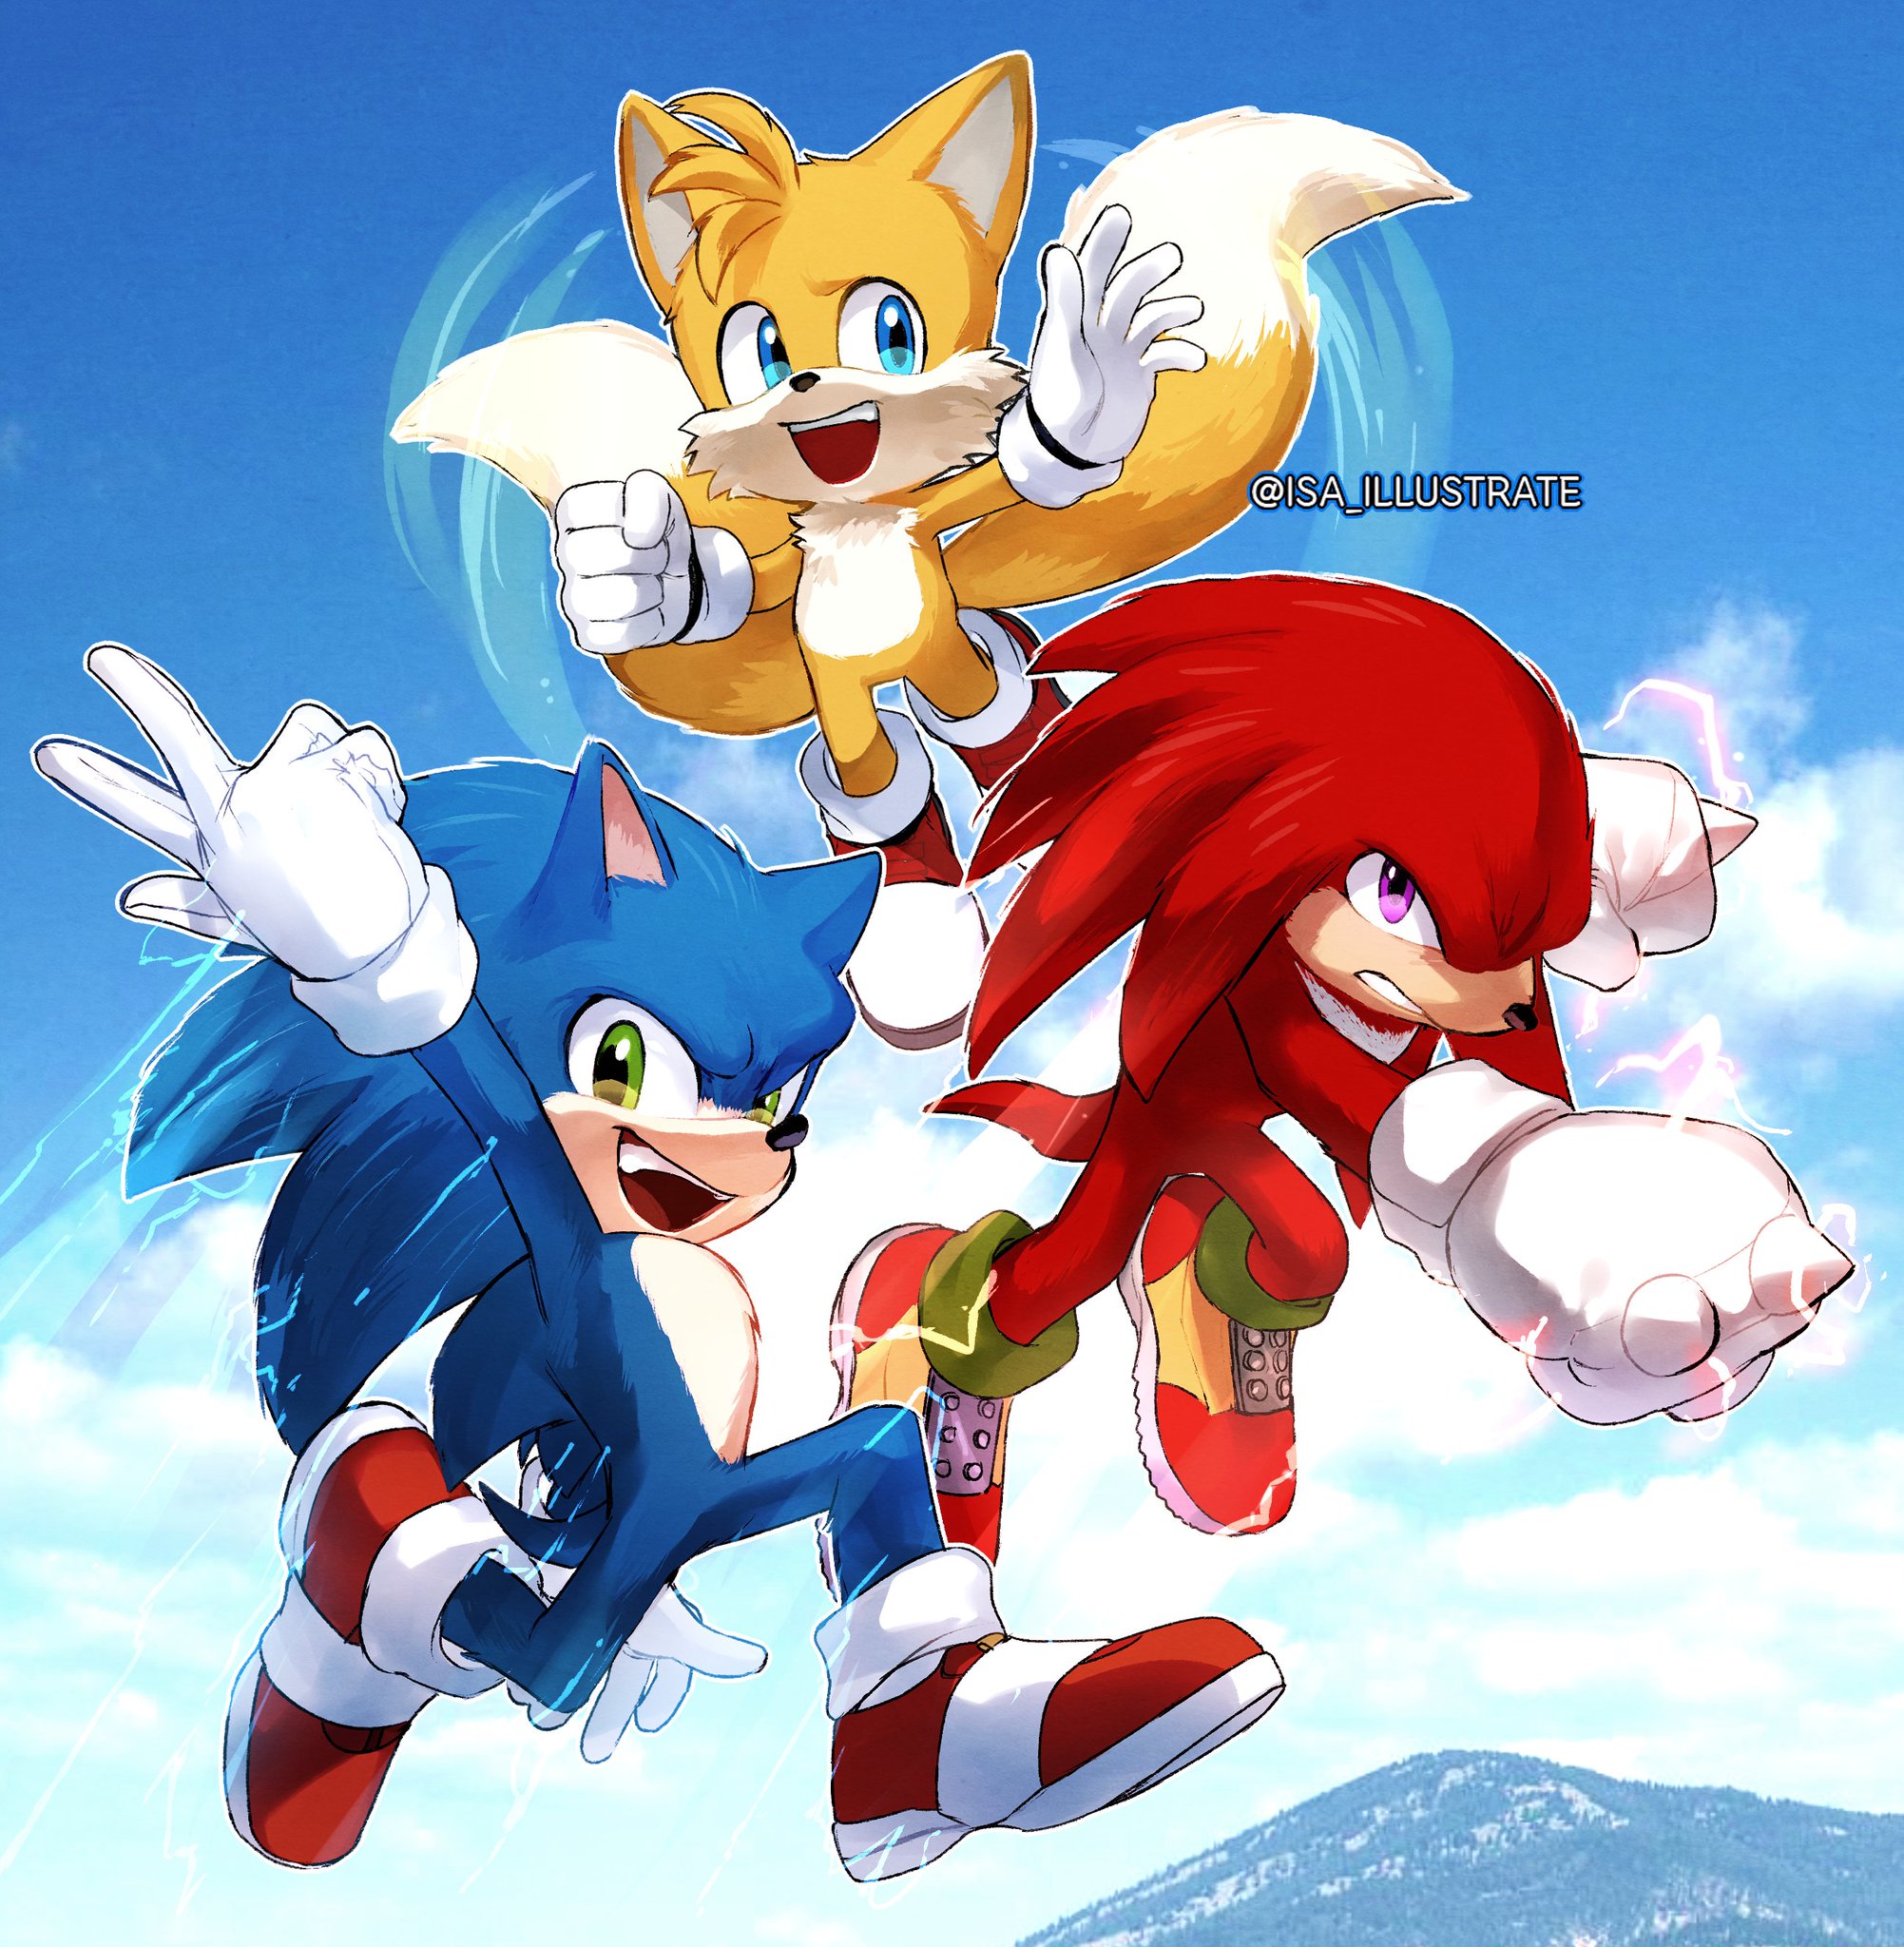 NattStar ⭐✏️ on X: Team Sonic! 💛💙❤️ #SonicMovie2 #Sonic #Tails  #KnucklesTheEchidna  / X